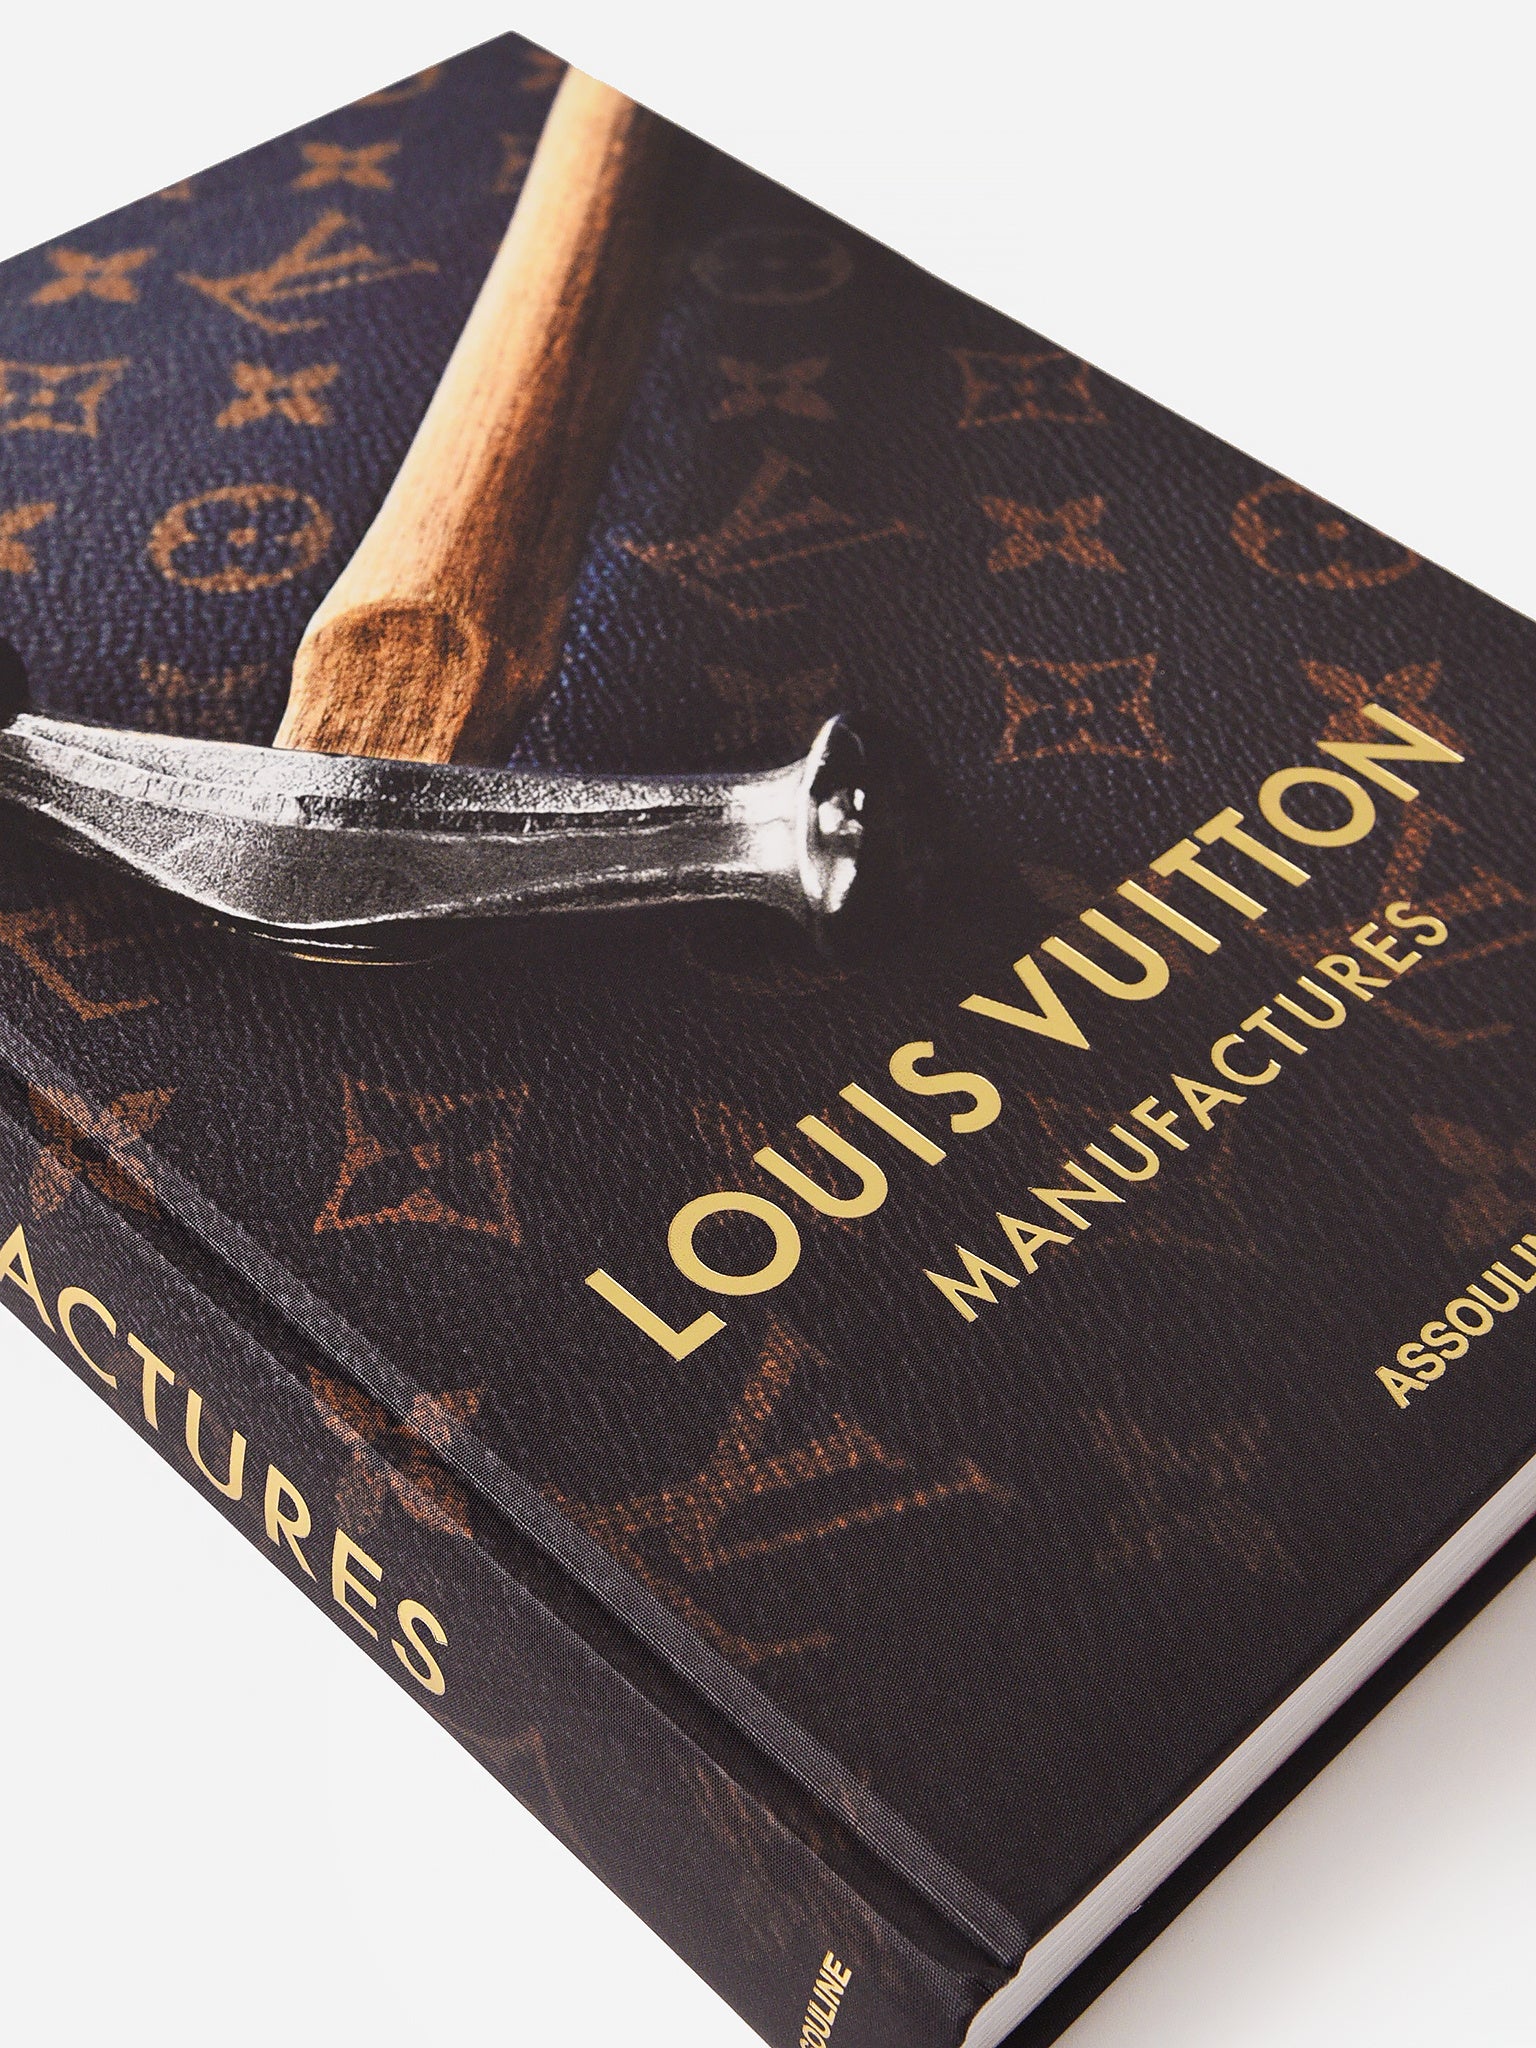 Louis Vuitton: The Birth of Modern Luxury Updated Edition: Louis